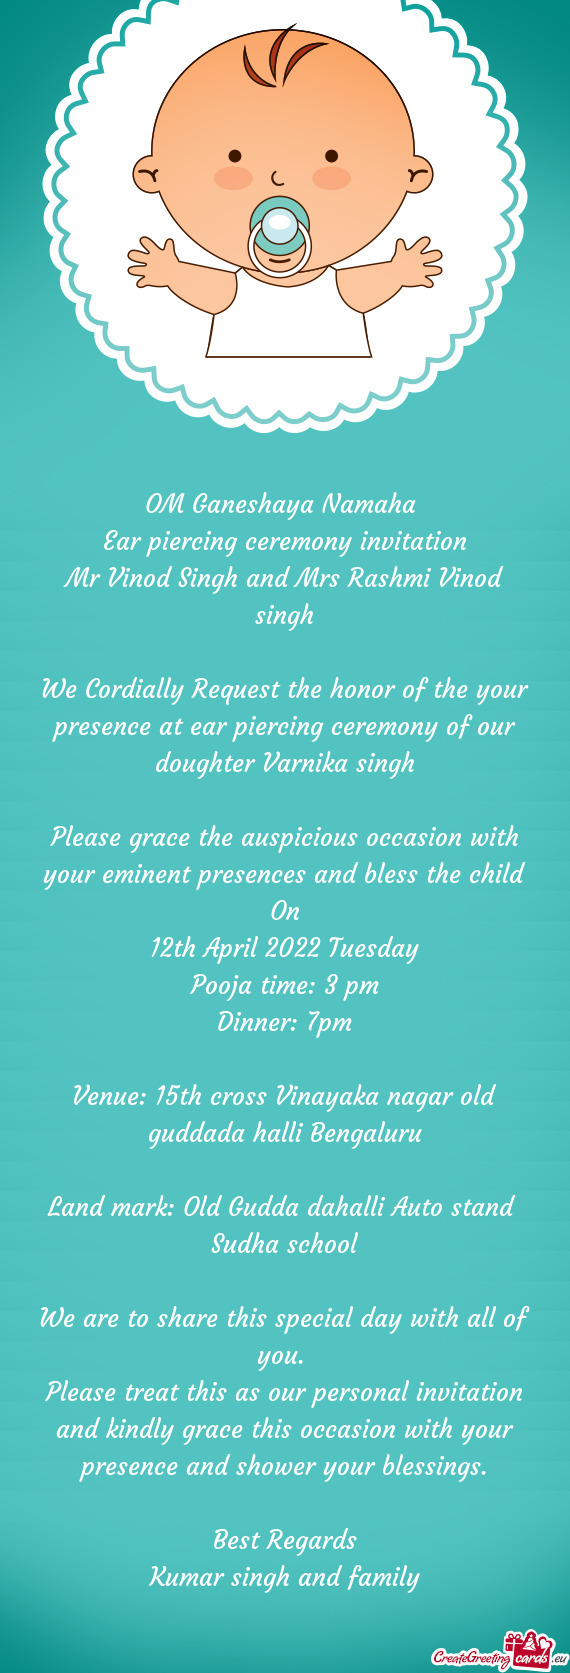 Mr Vinod Singh and Mrs Rashmi Vinod singh